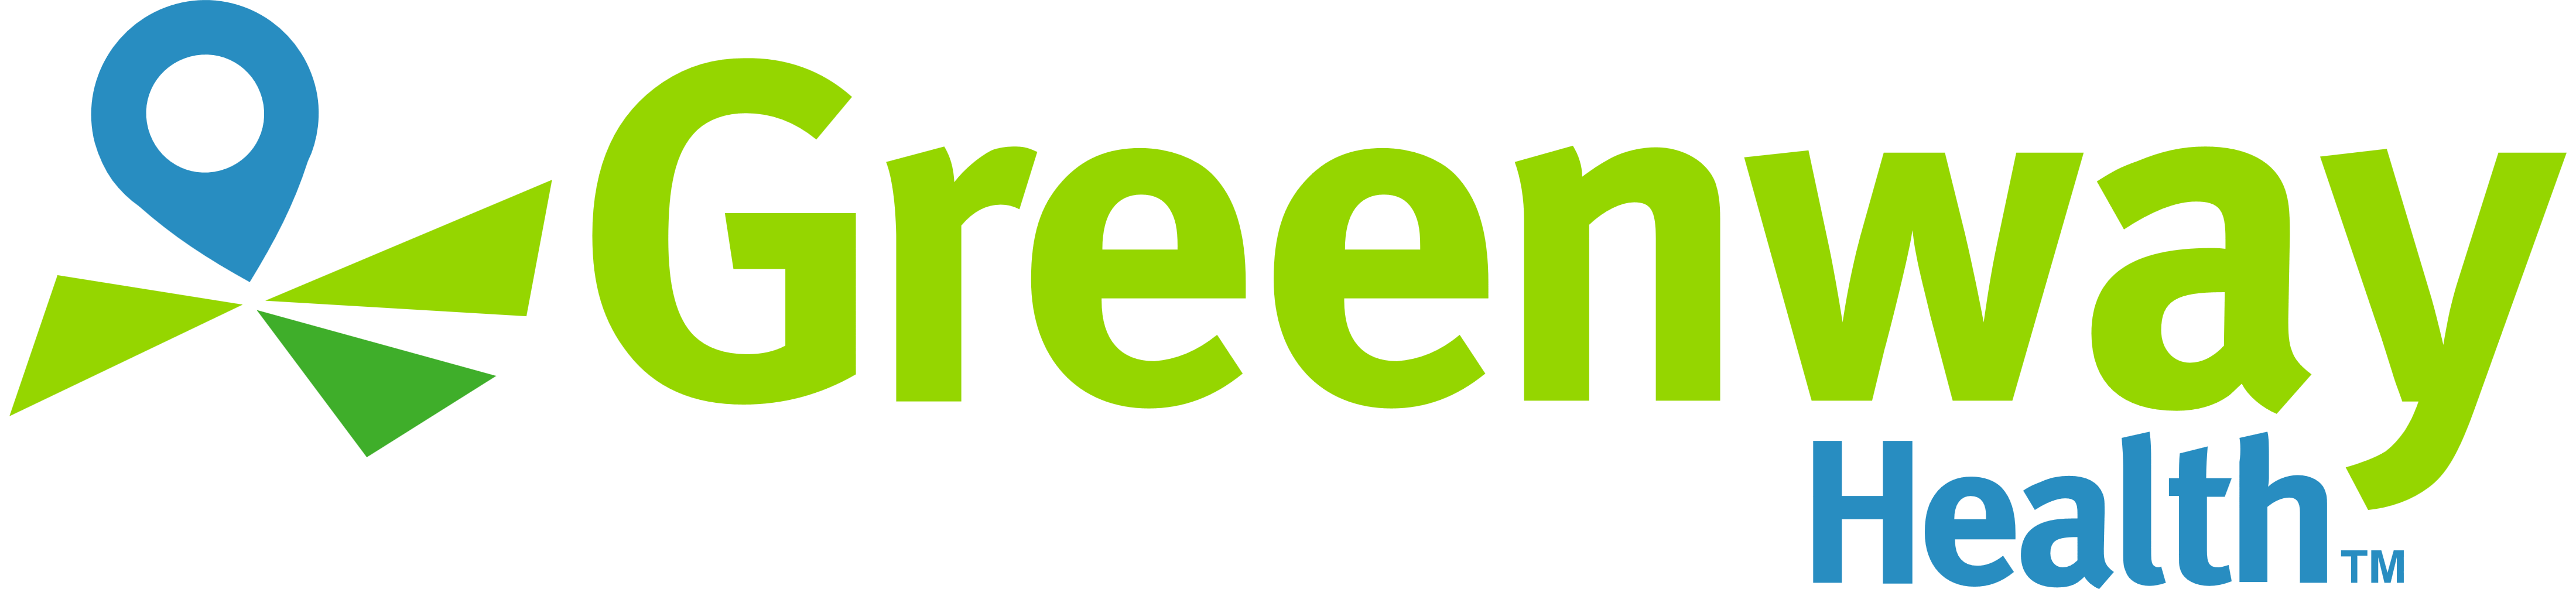 GreenwayHealth logo